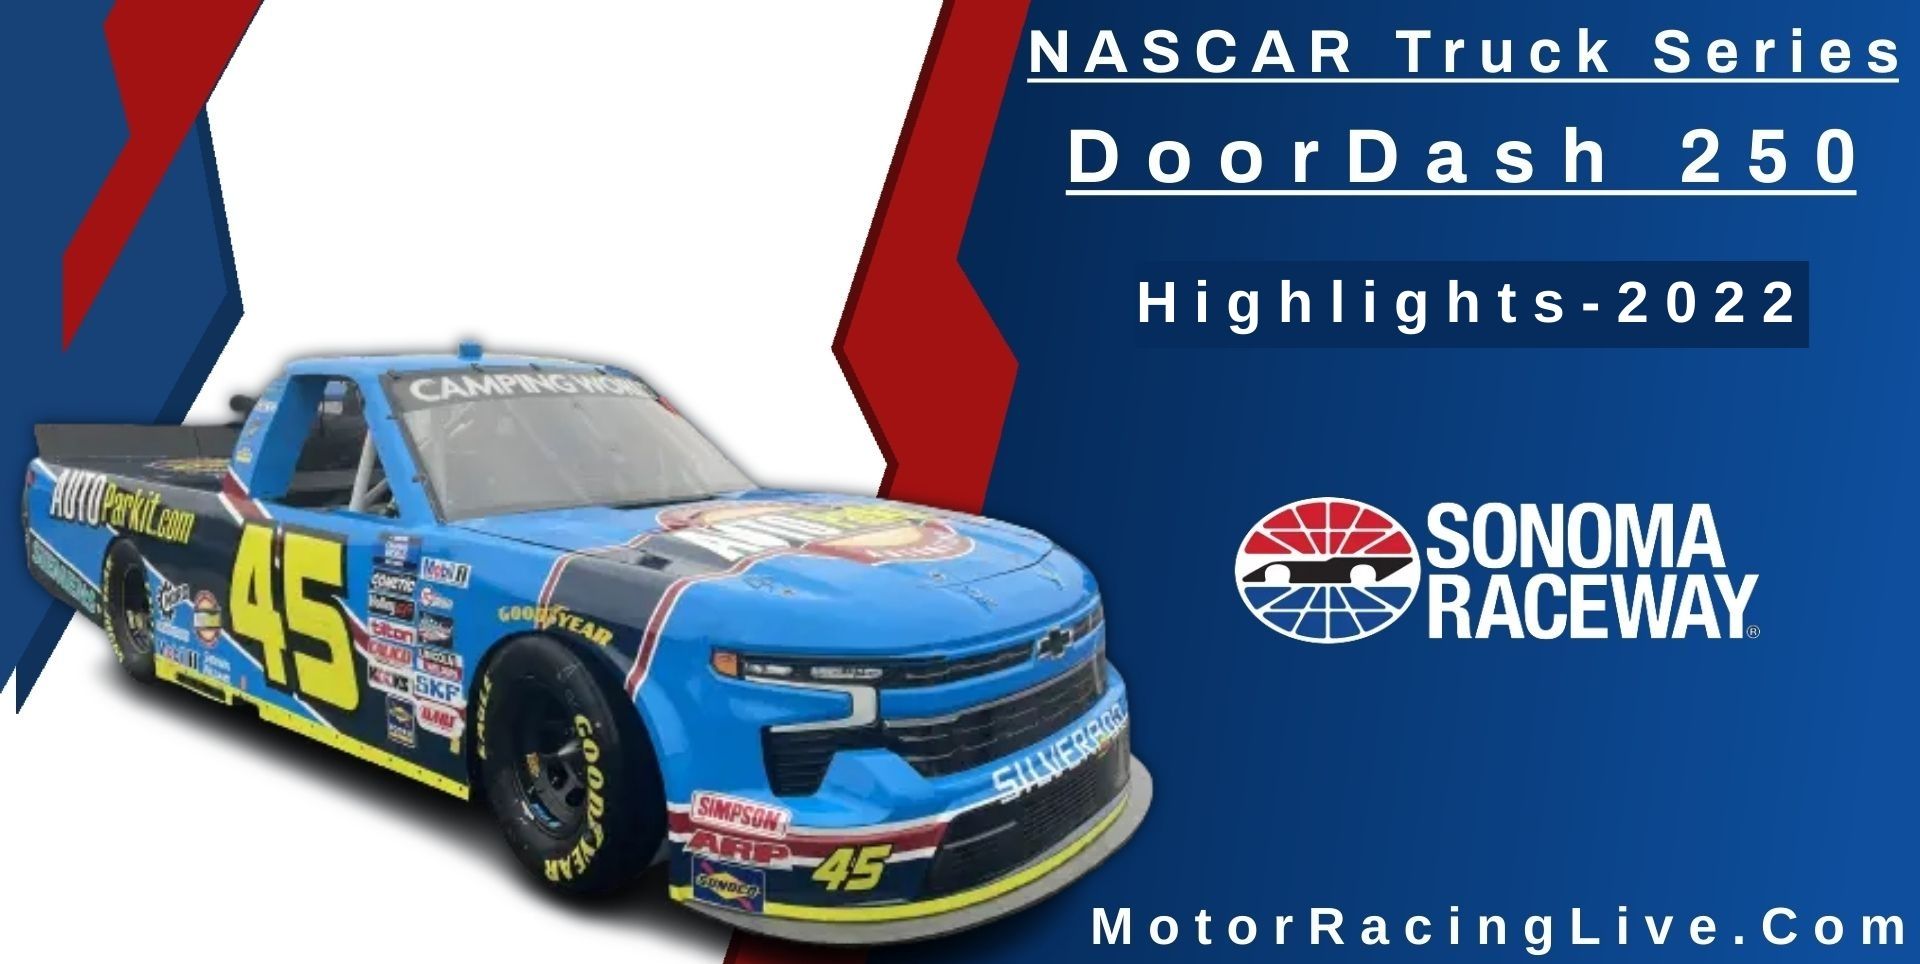 DoorDash 250 Highlights 2022 NASCAR Truck Series